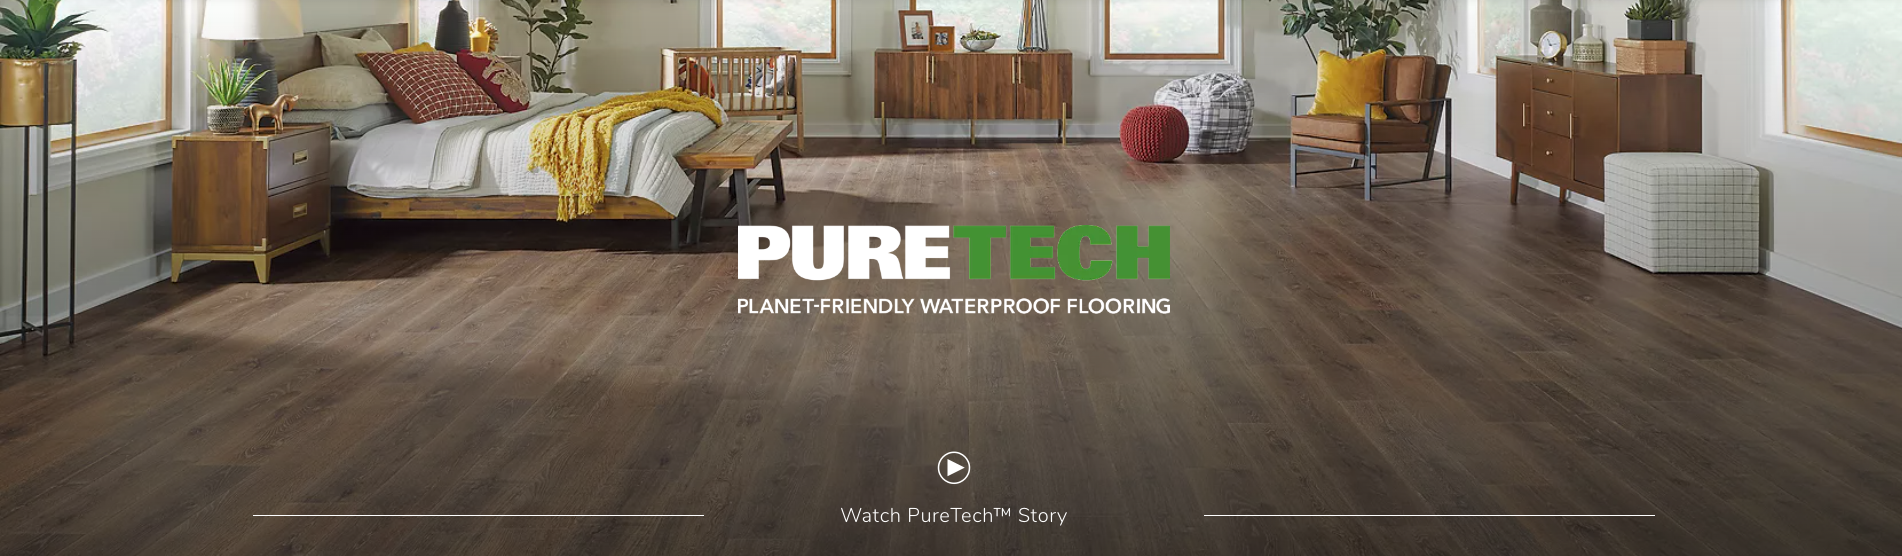 PureTech - the planet-friendly waterproof flooring